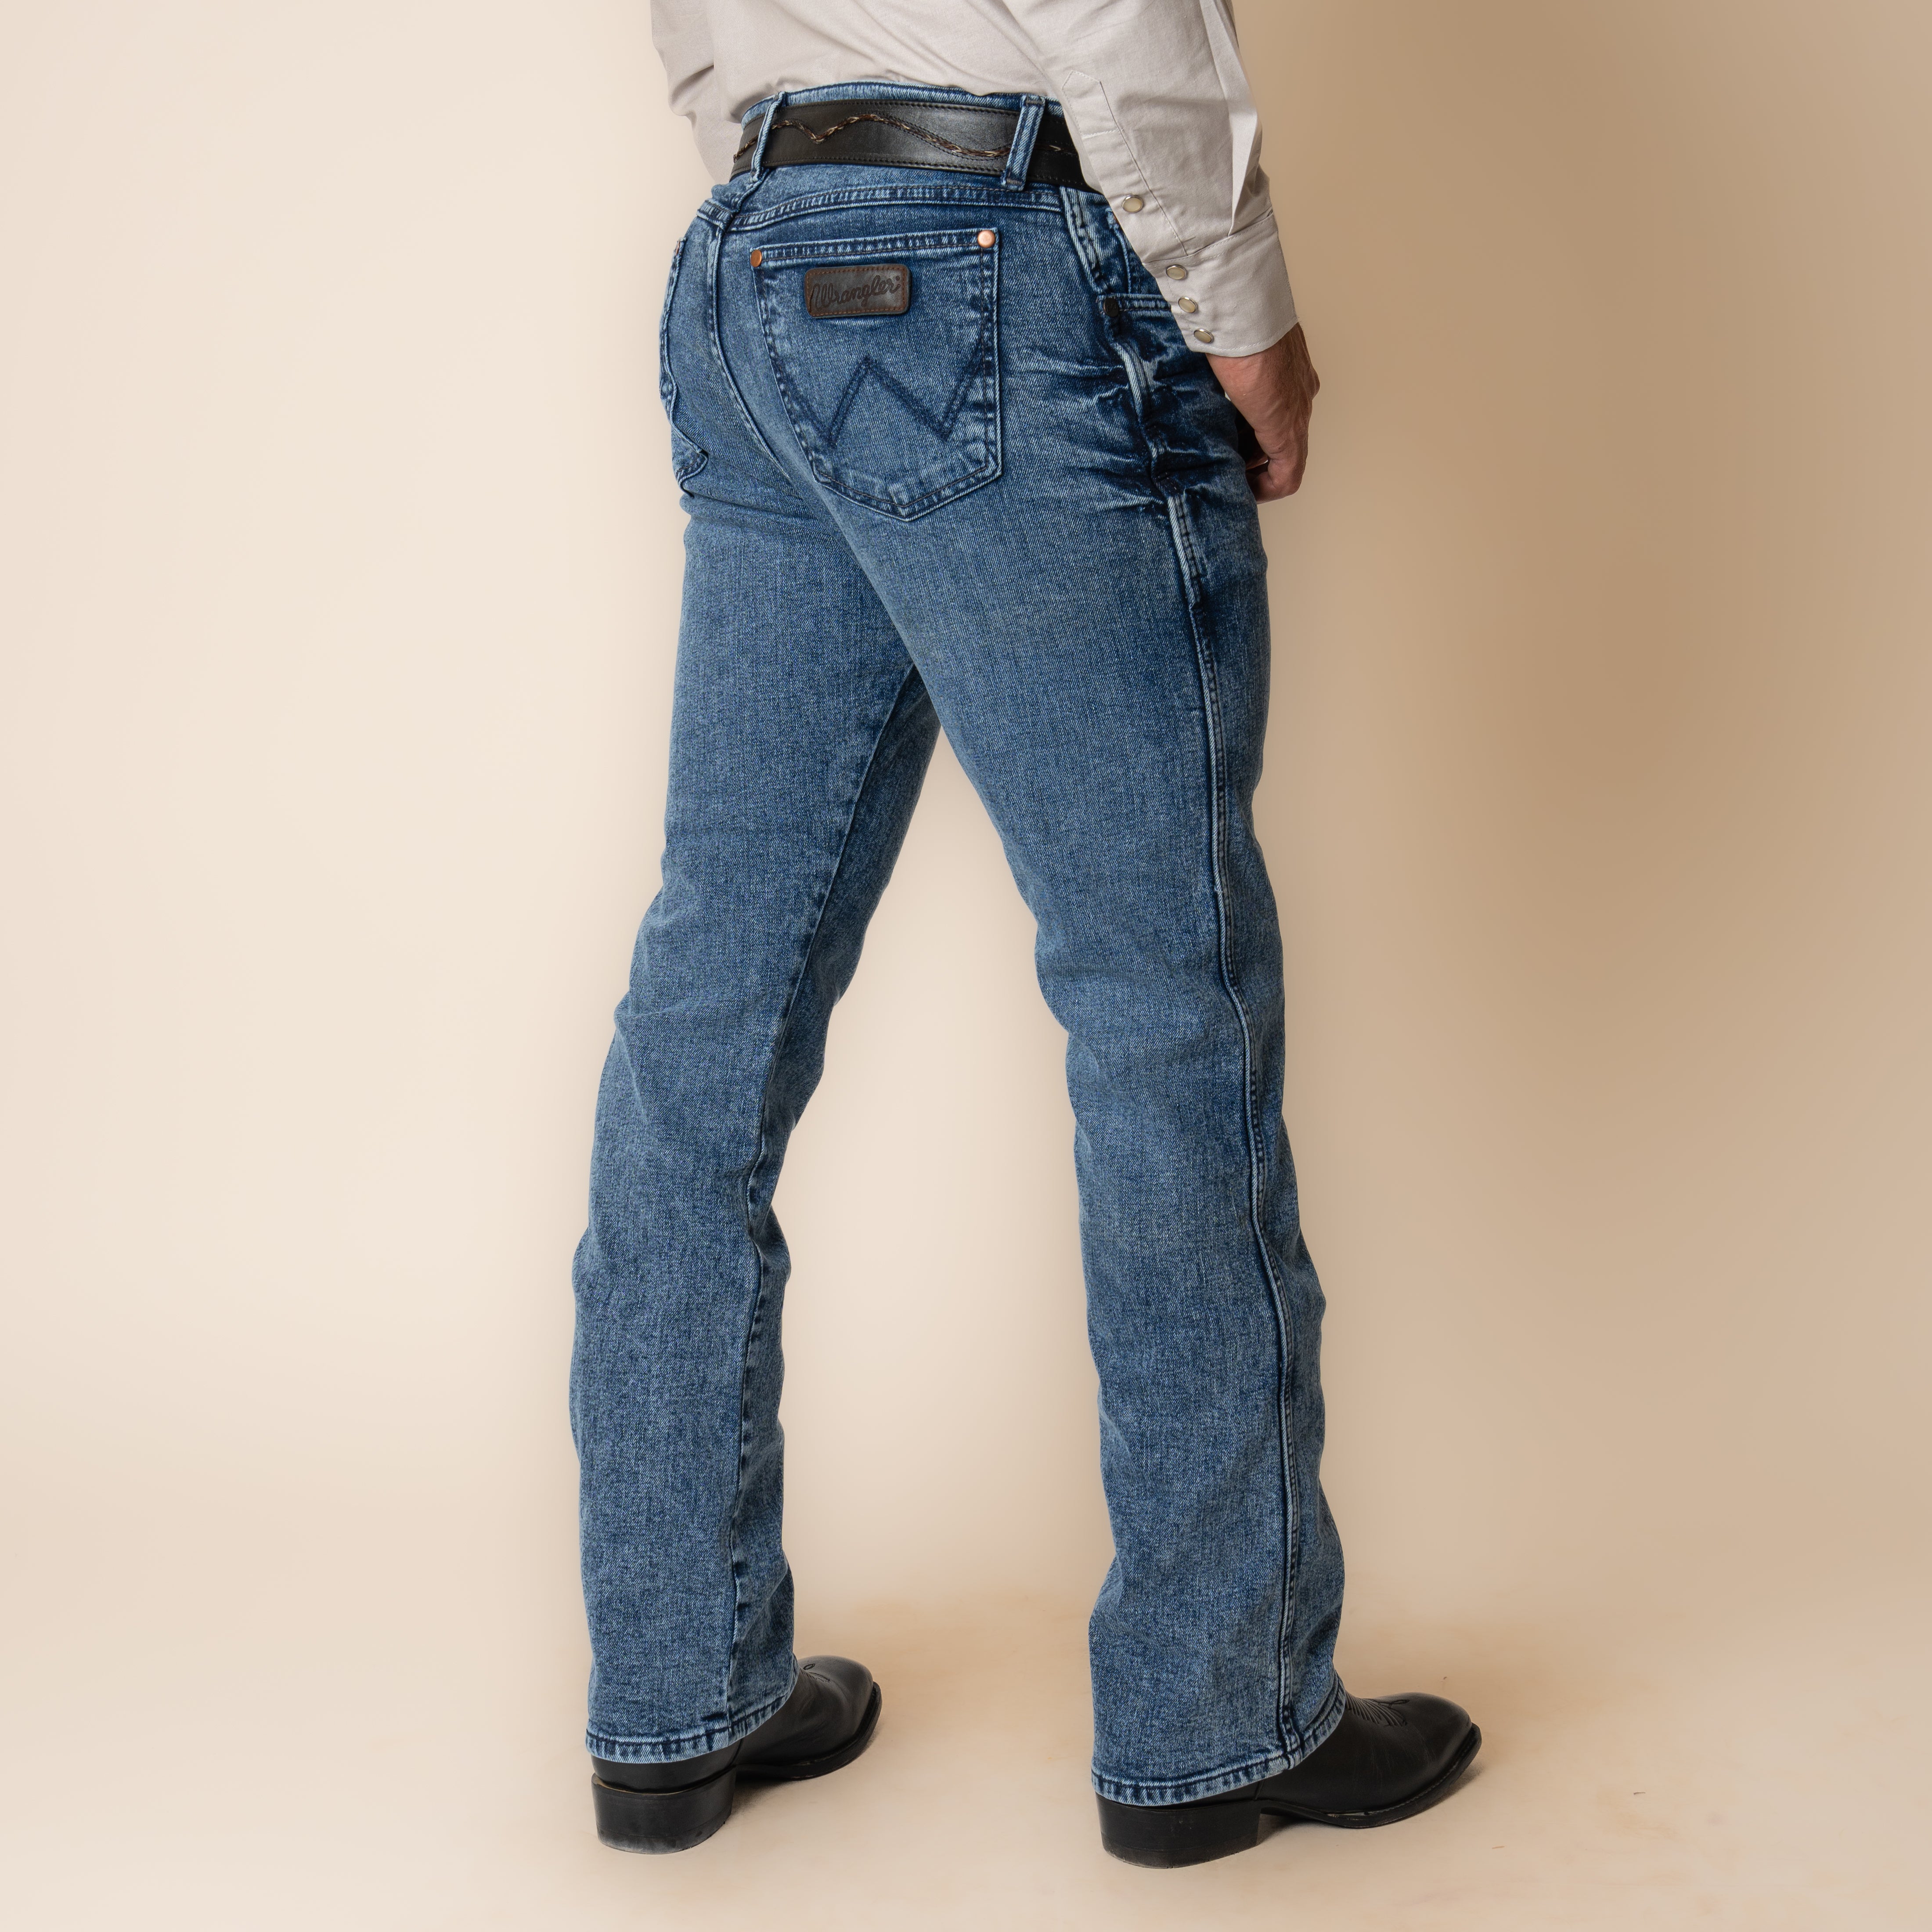 Jeans Wrangler Retro Slim Boot Caballero